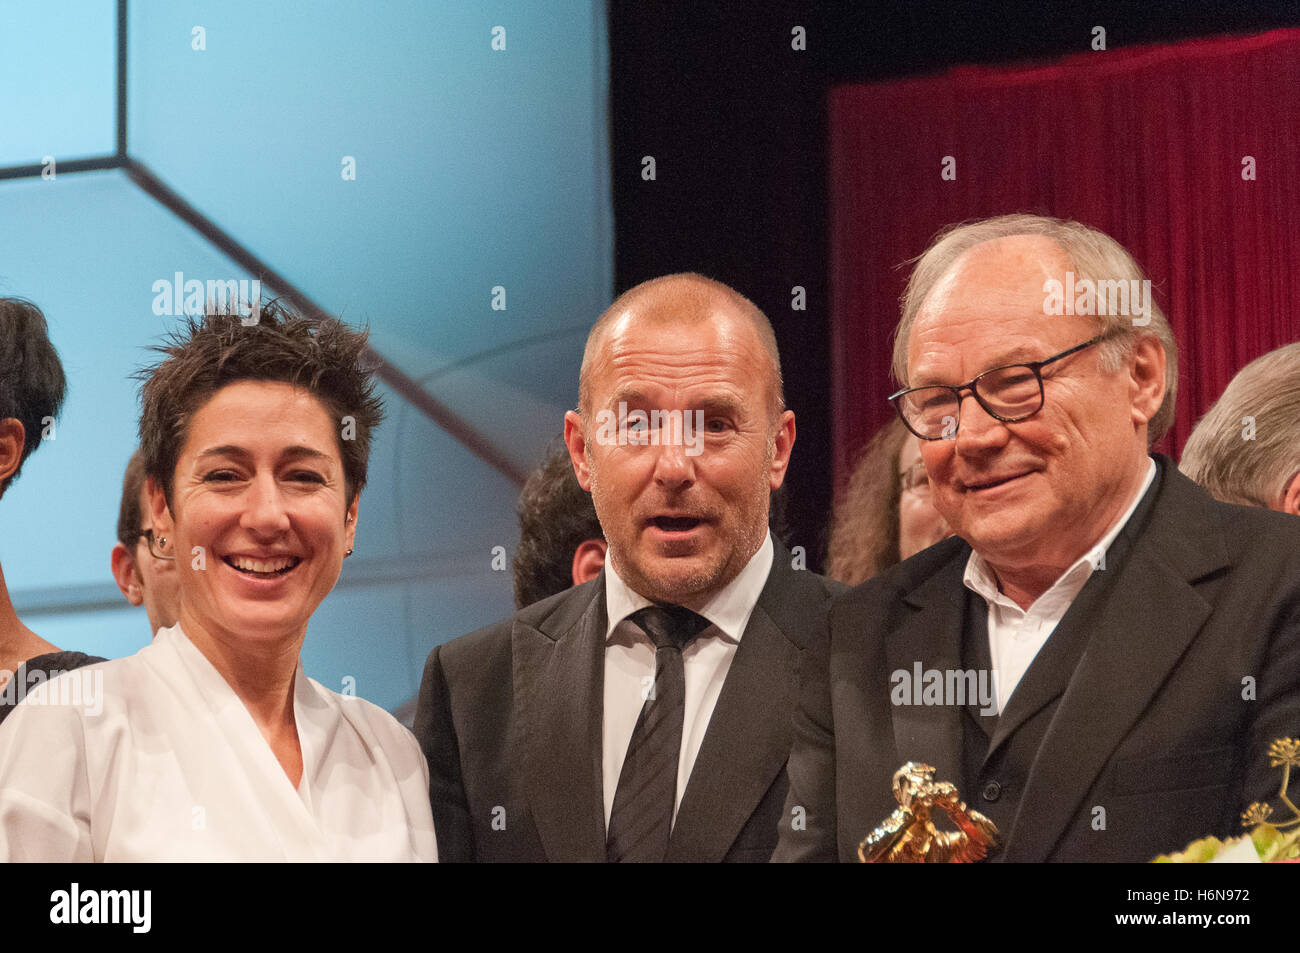 FRANCOFORTE sul MENO, GERMANIA - OTTOBRE 21: Dunja Hayali, Heino Ferch, Klaus Maria Brandauer all'Hessischer Film- und Kinopreis 2016 Foto Stock